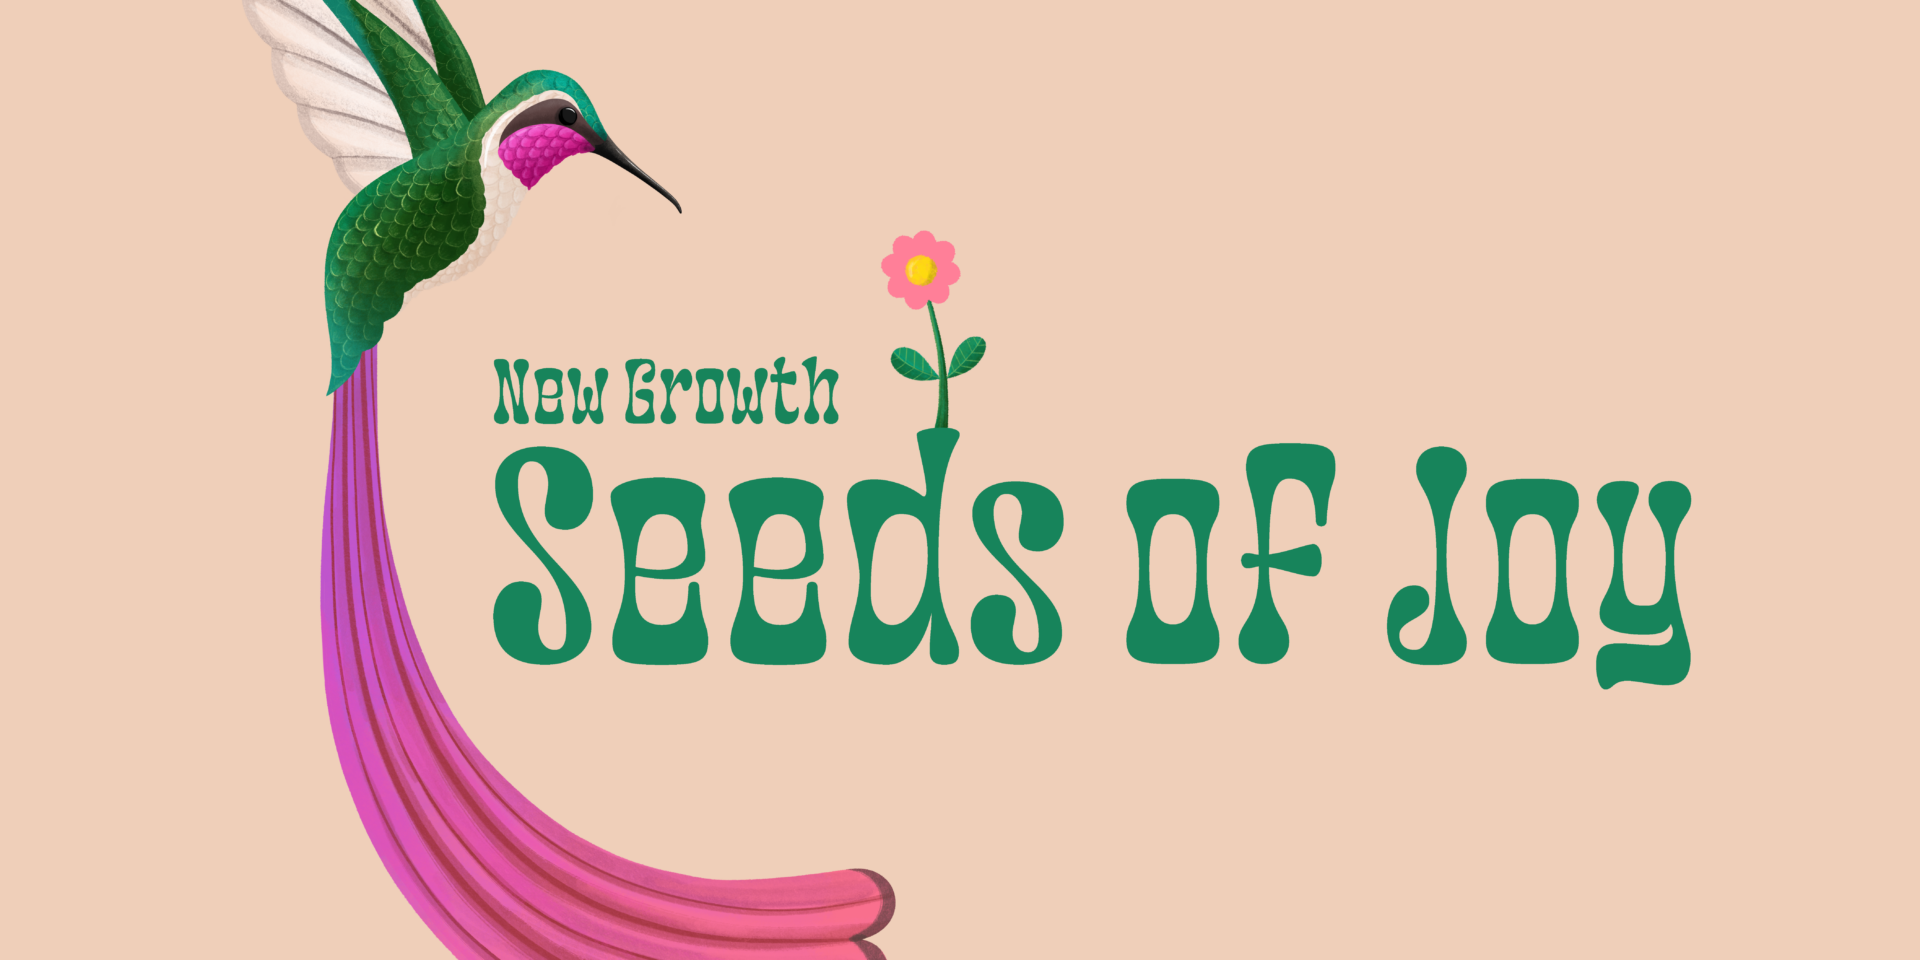 New Growth: Seeds of Joy